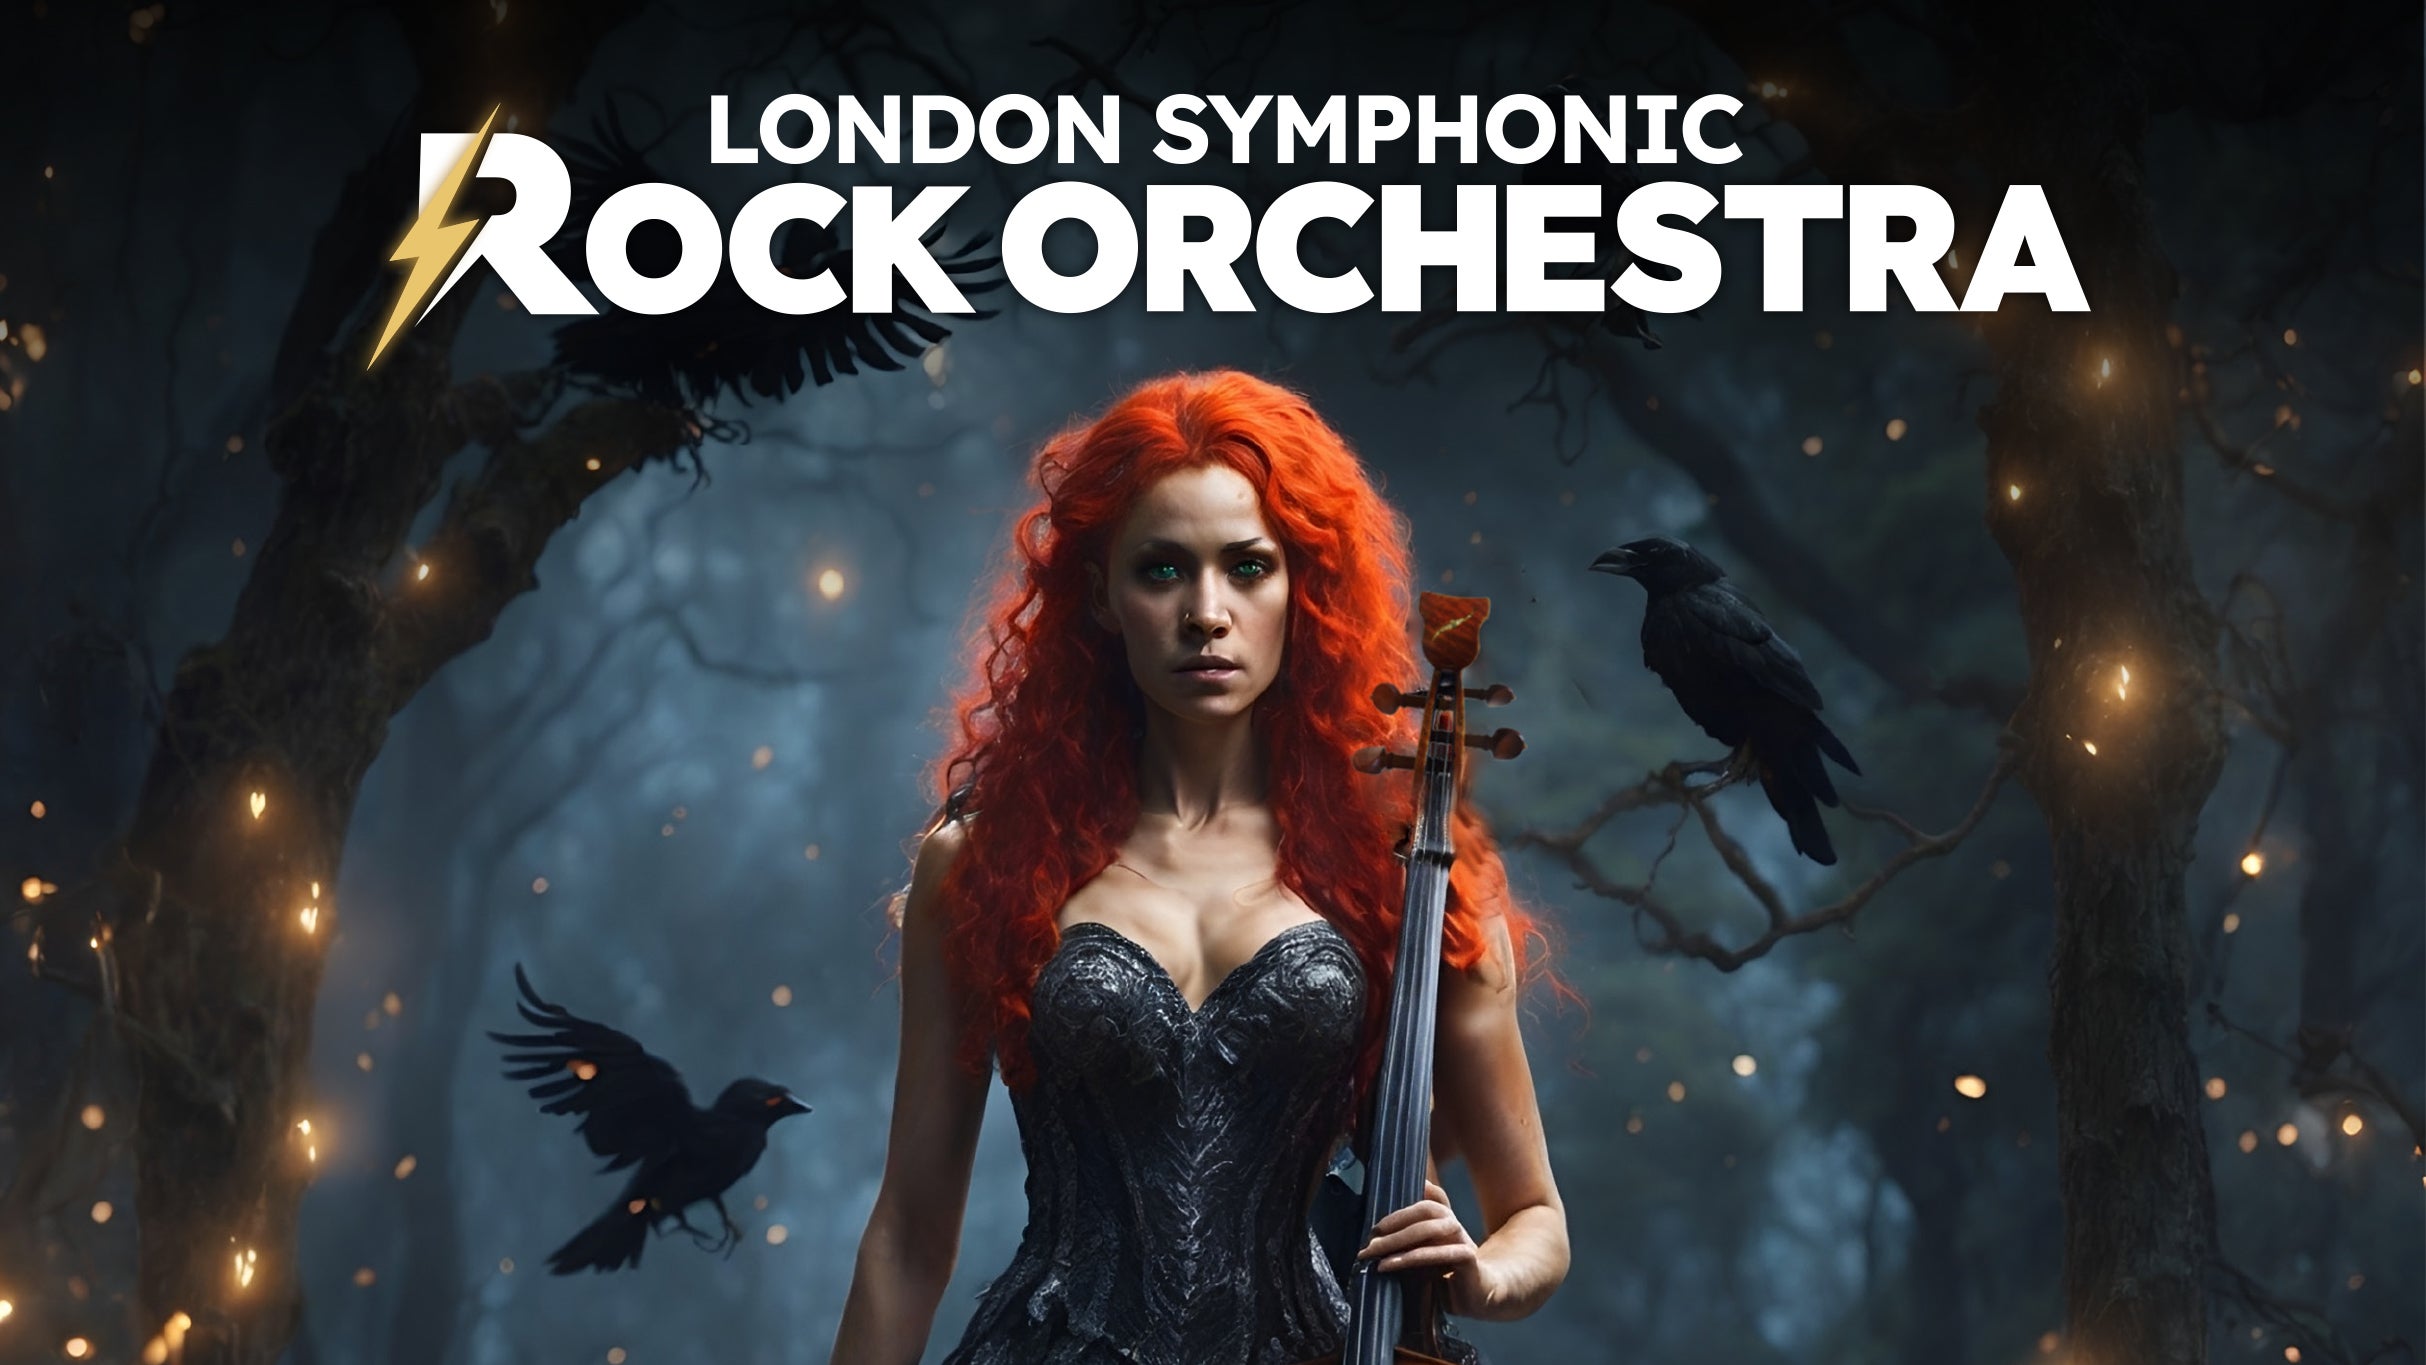 London Symphonic Rockorchestra presale information on freepresalepasswords.com